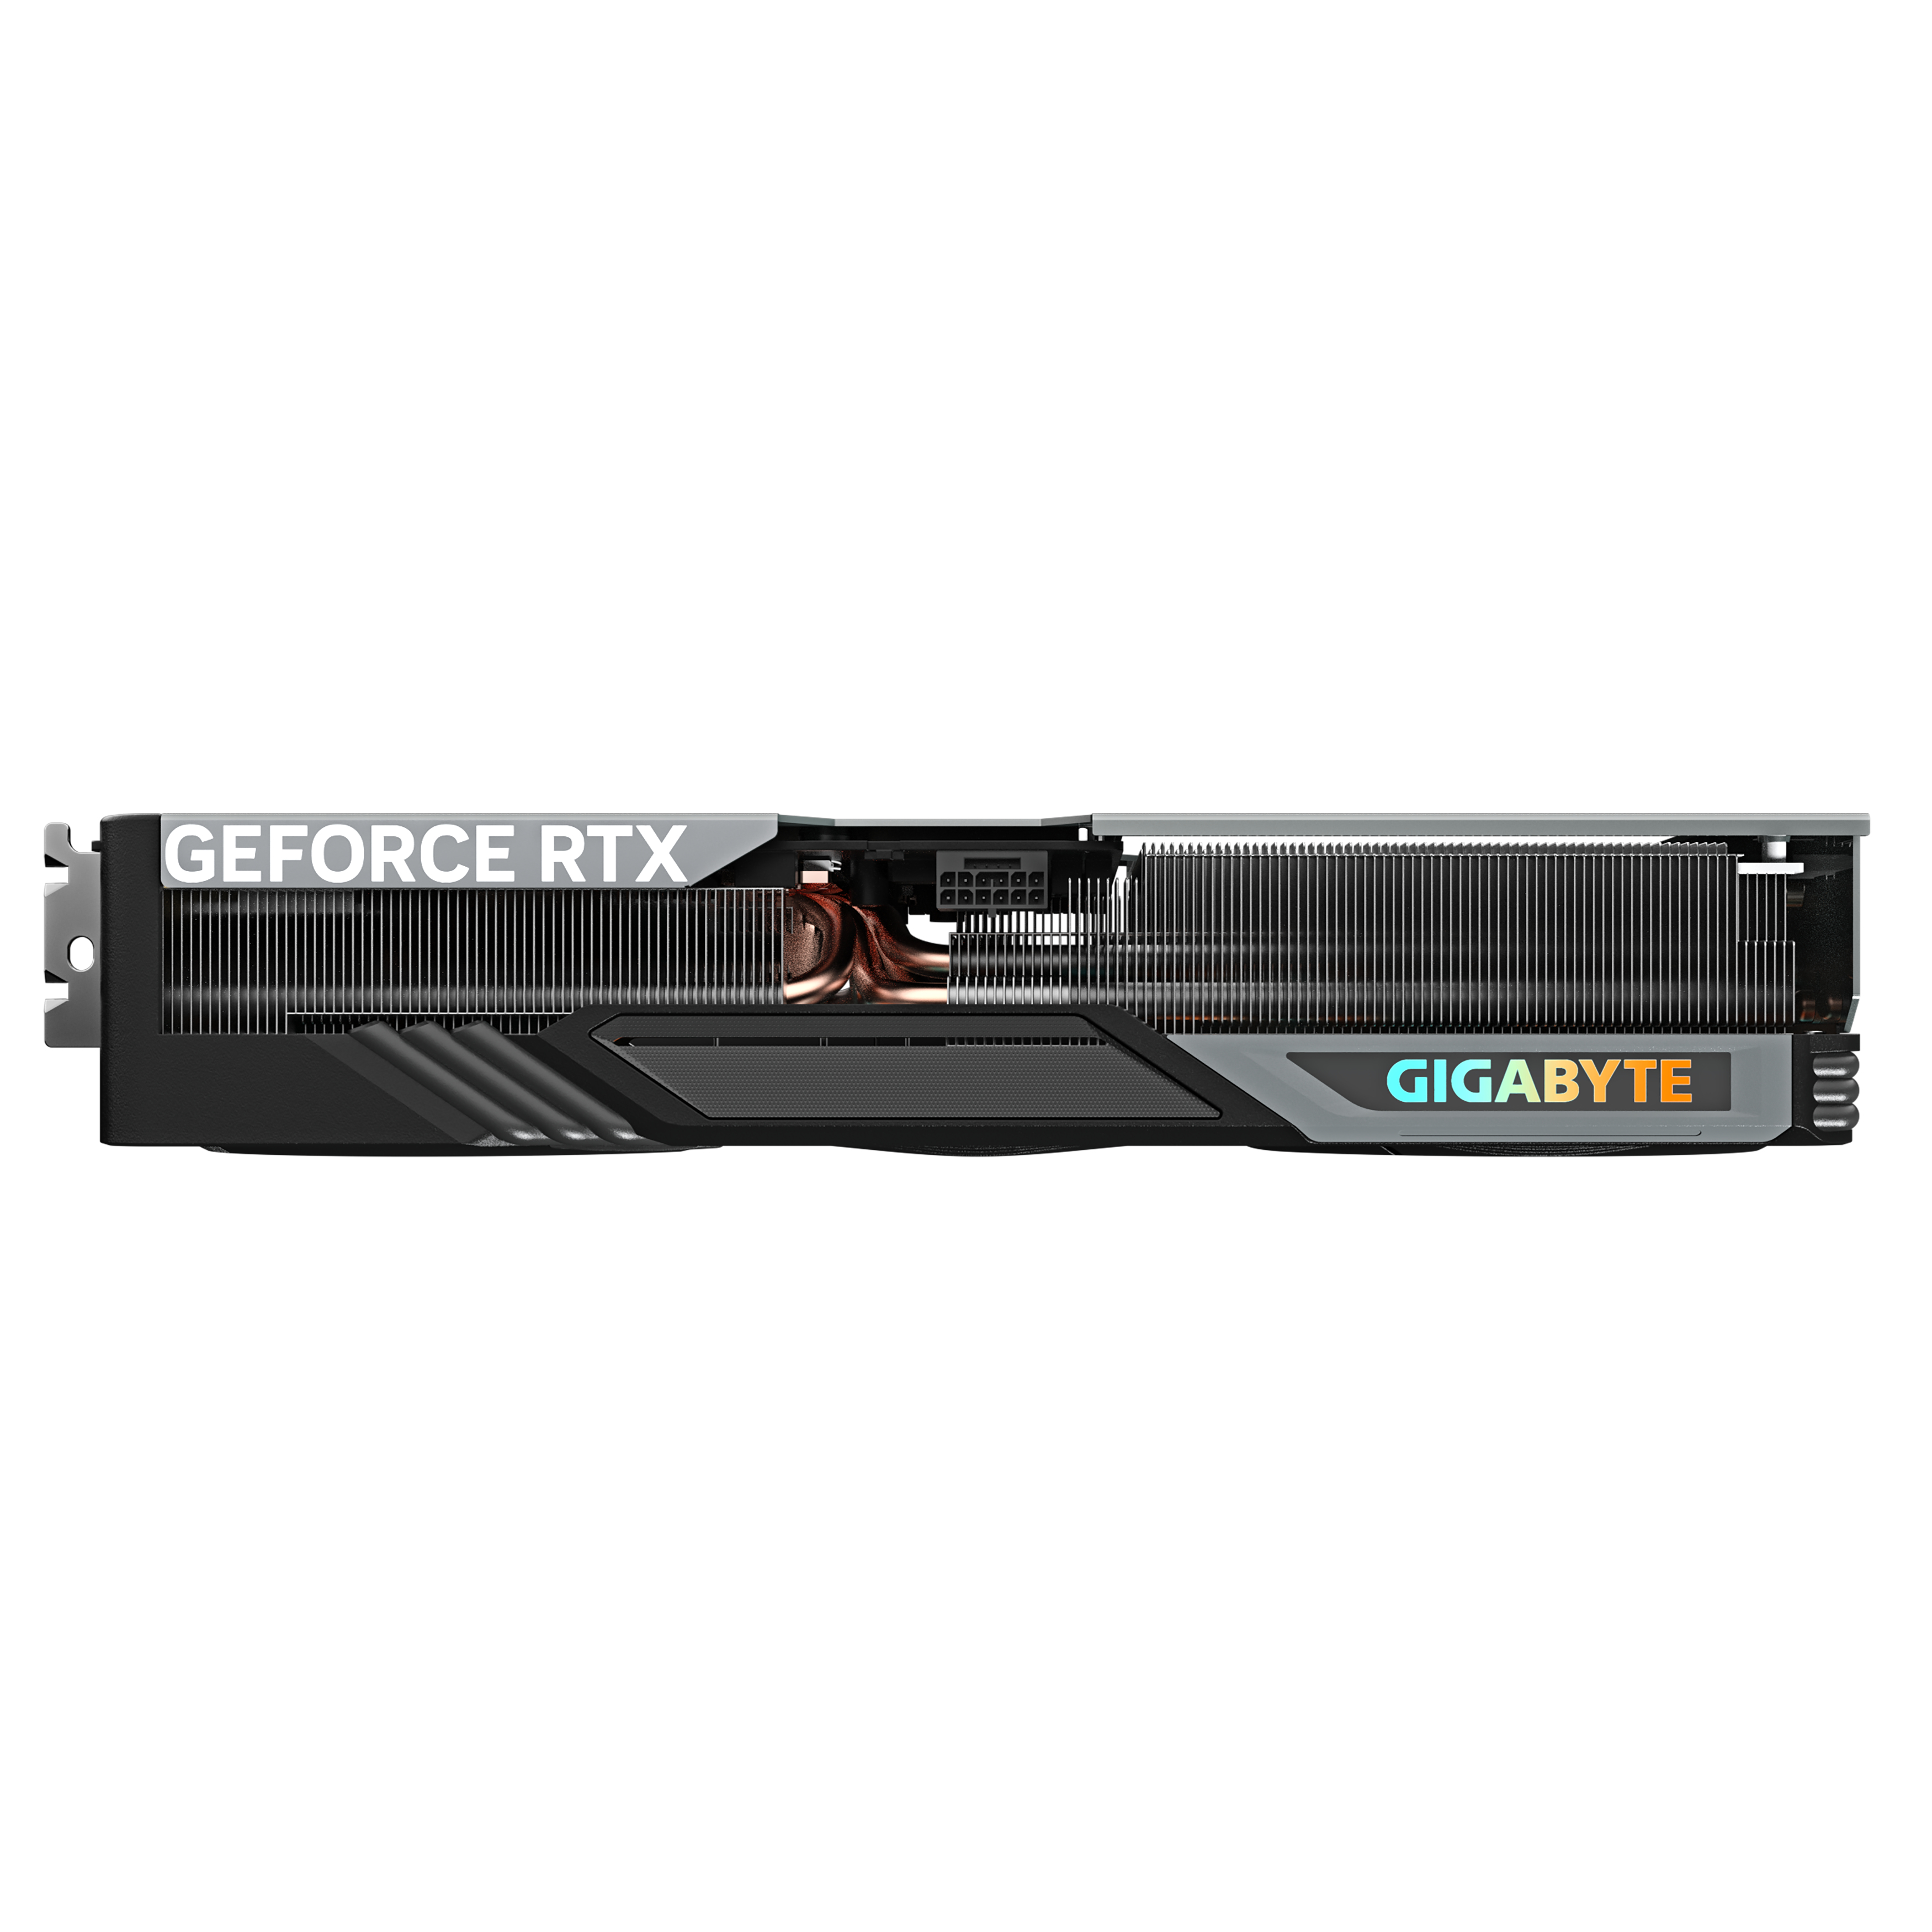 Gigabyte - Gráfica Gigabyte GeForce® RTX 4070 Ti SUPER Gaming OC 16GB GDDR6X DLSS3